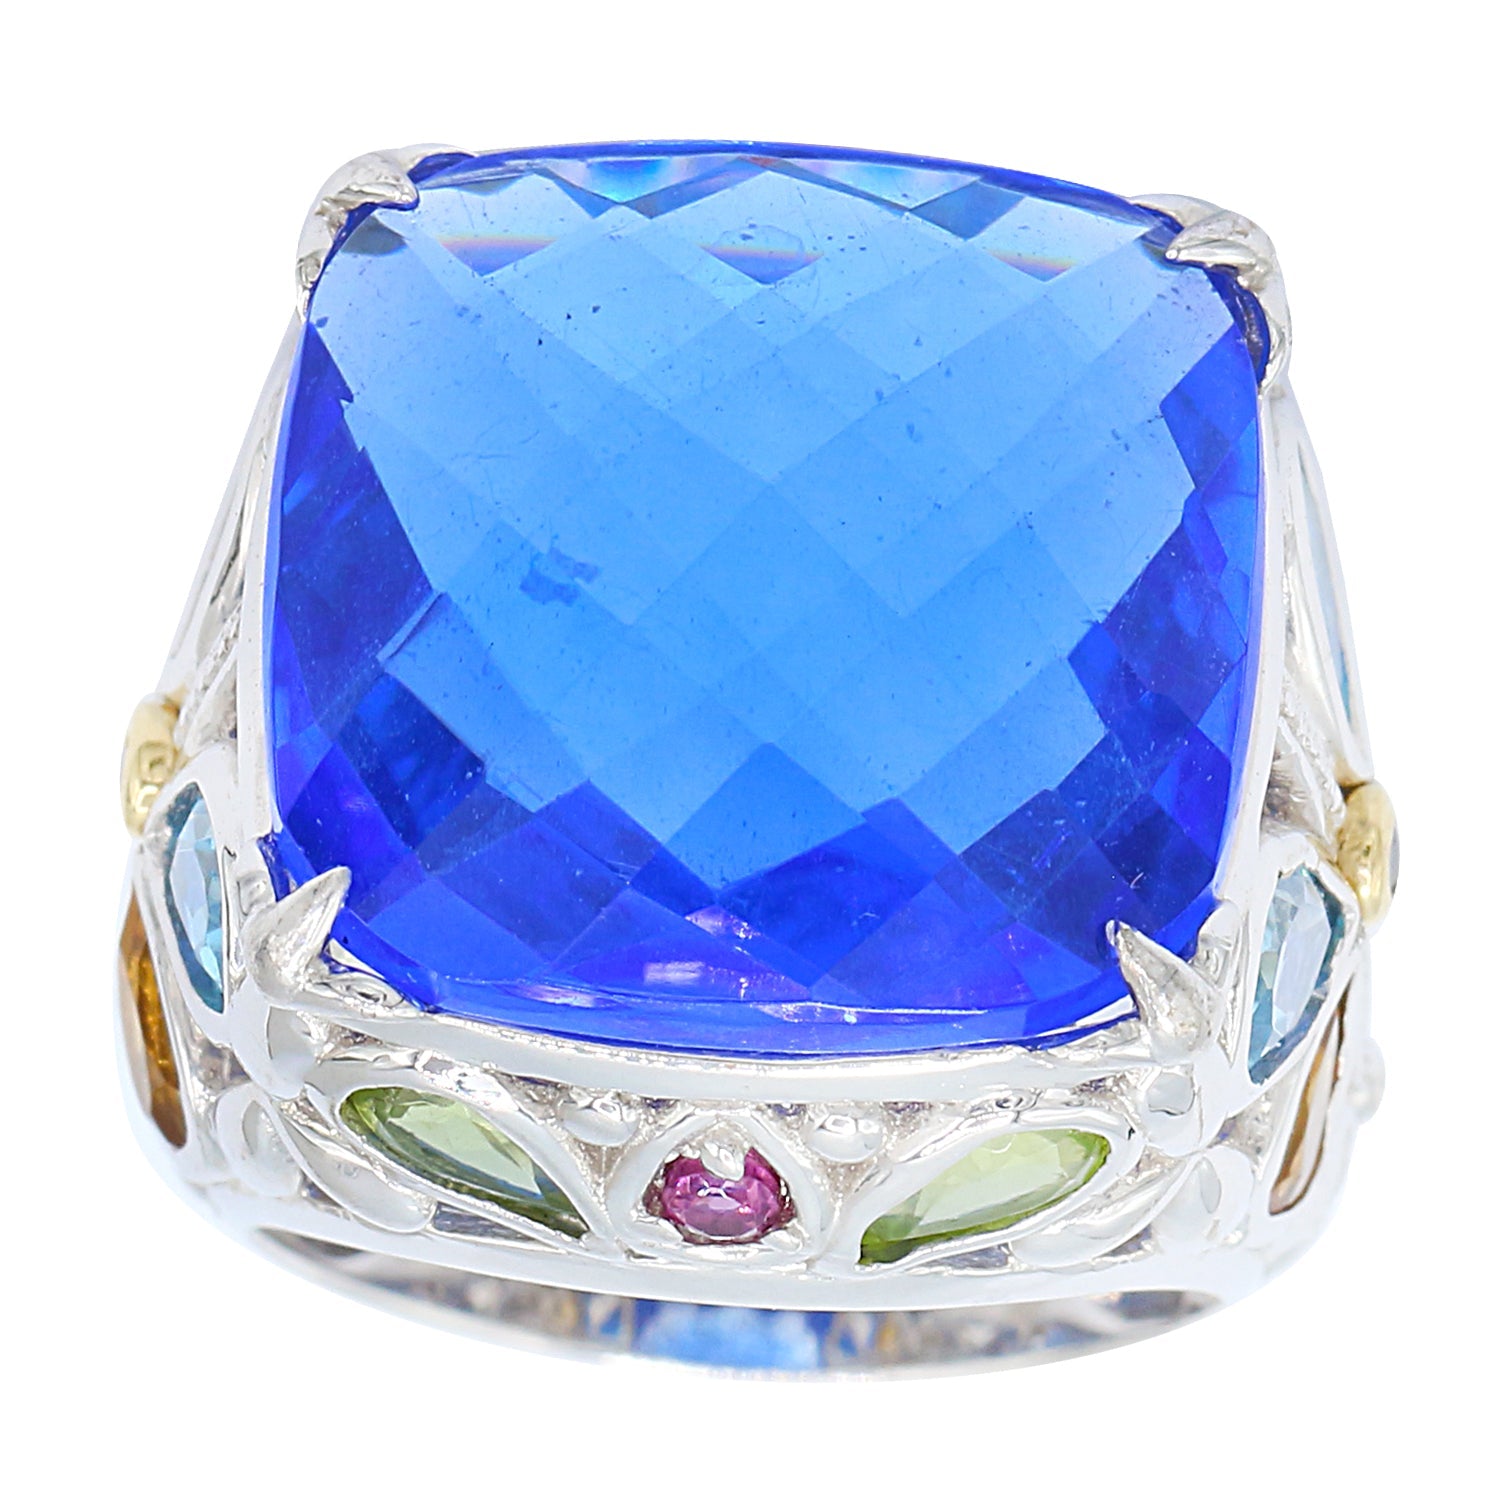 BBG Gems Two-tone Blue or Green Quartz Amethyst Peridot and Citrine Ring